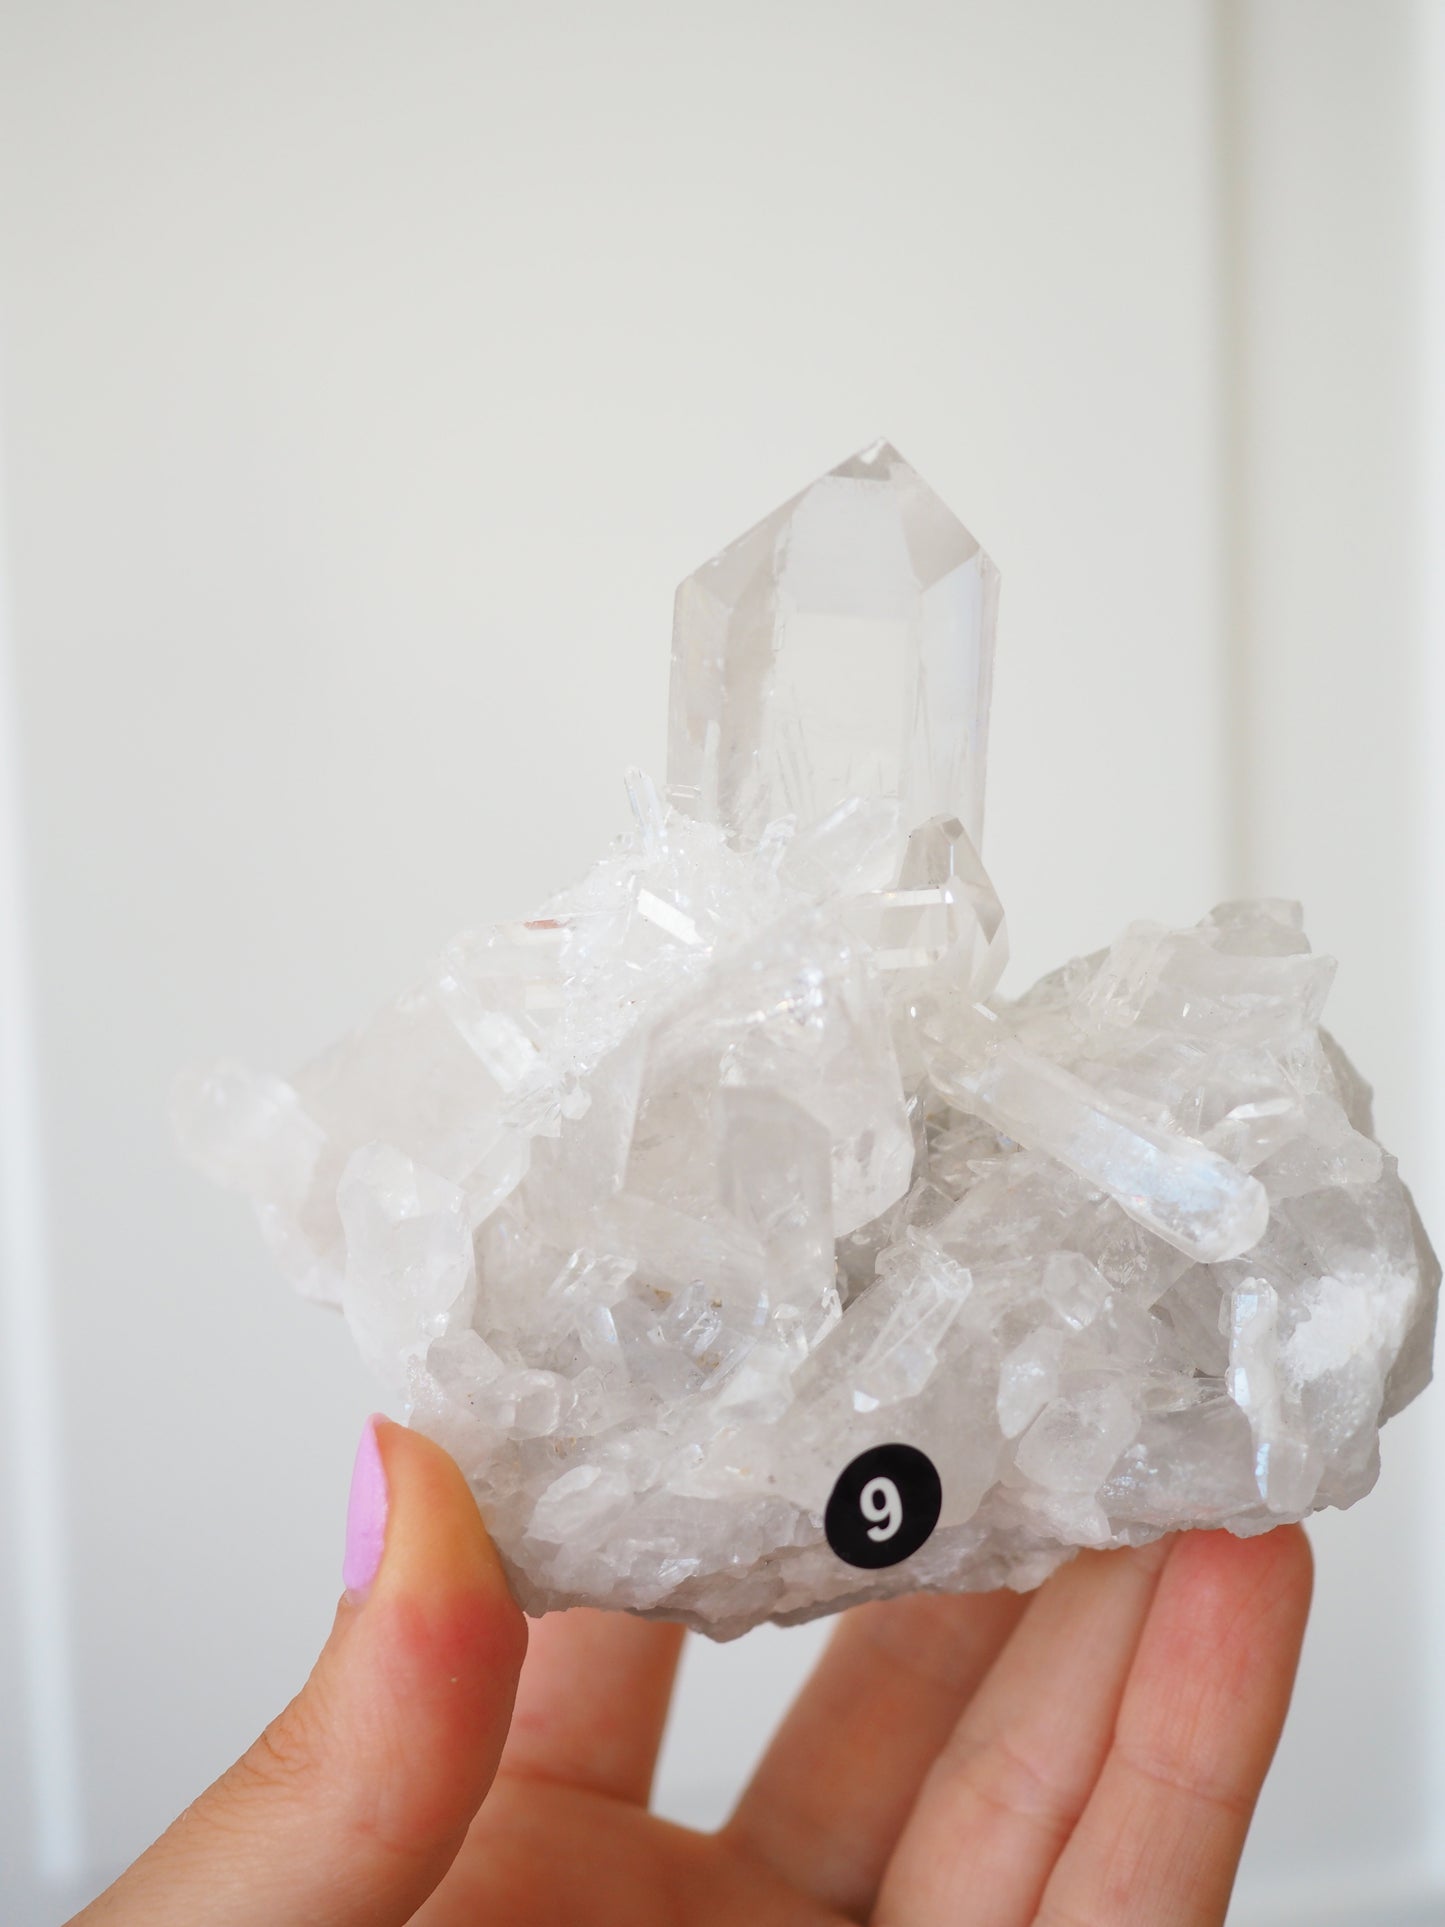 Bergkristall Cluster ca 11cm [9] - aus Minas Gerais Brasilien HIGH QUALITY